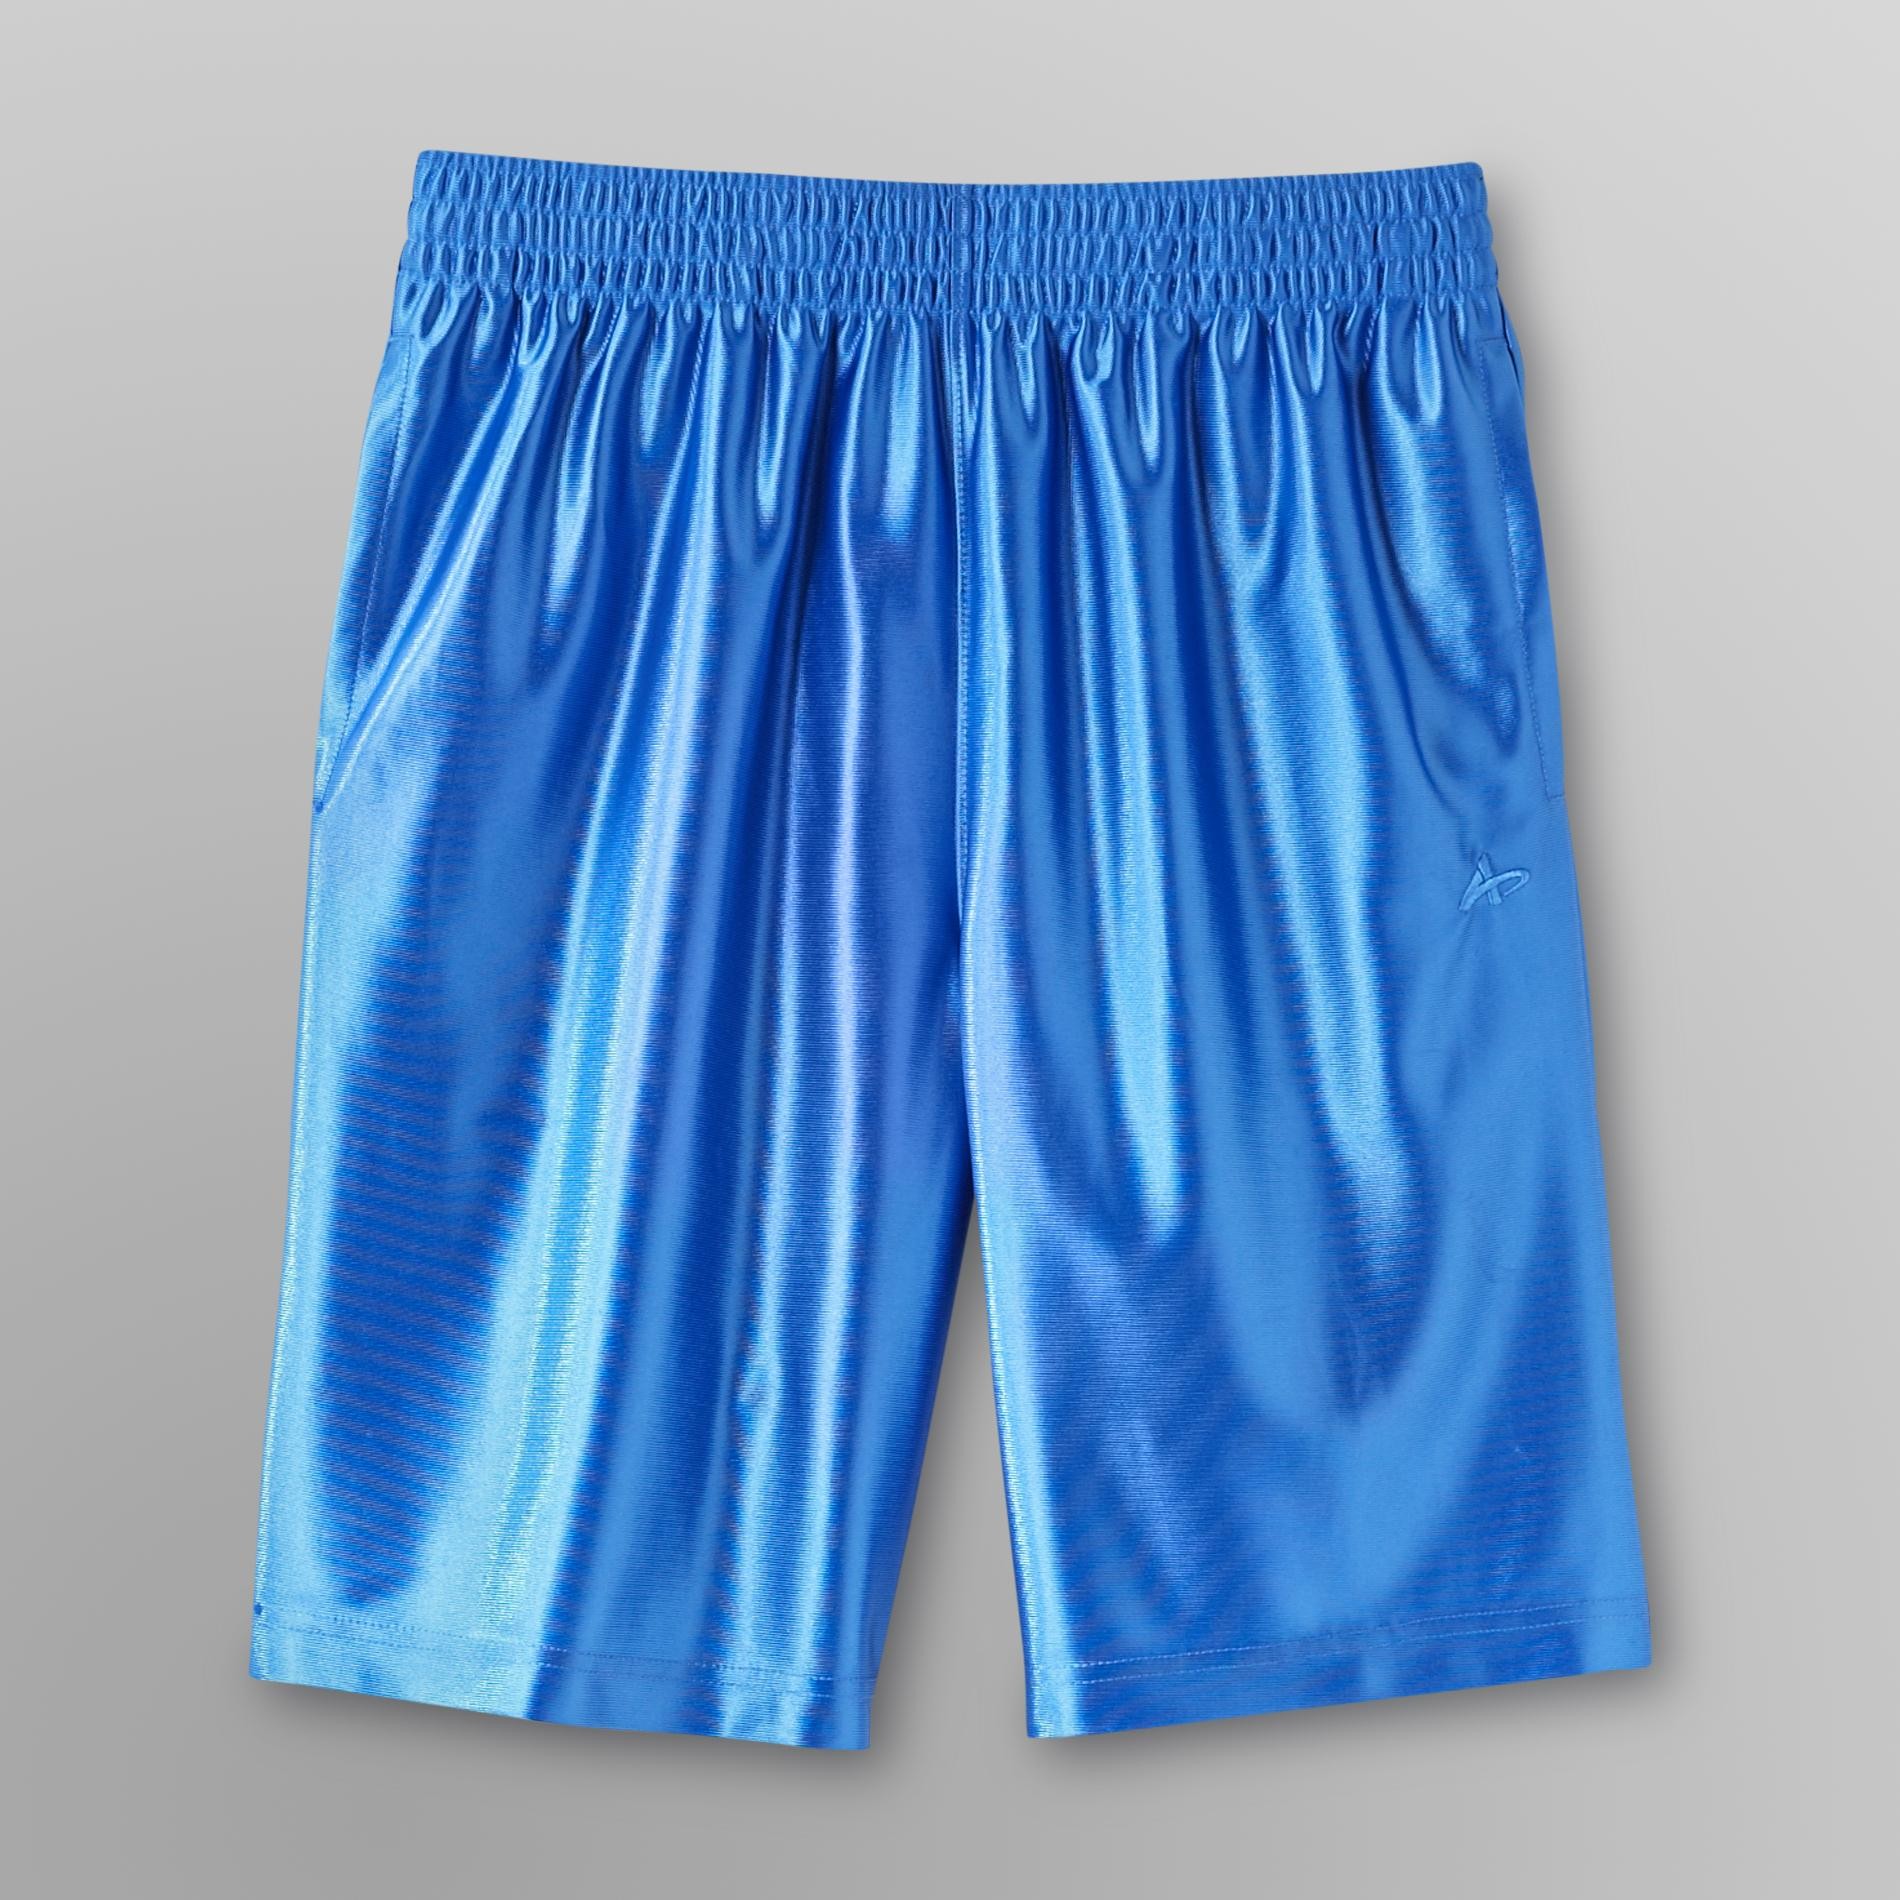 Athletech Men's Basketball Shorts - Neon